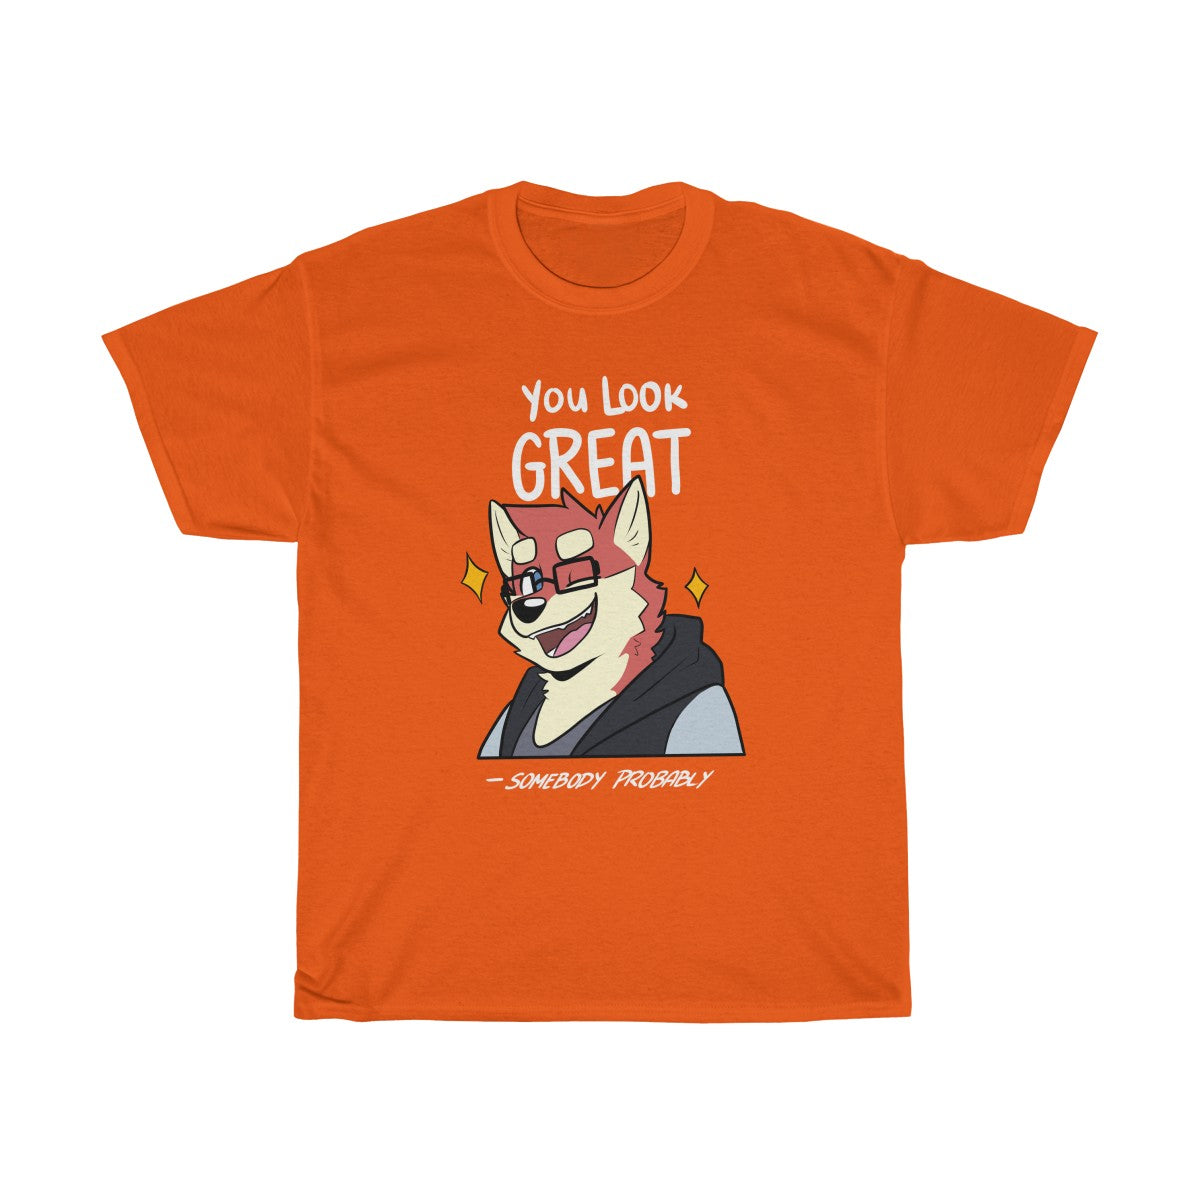 You Look Great - T-Shirt T-Shirt Ooka Orange S 